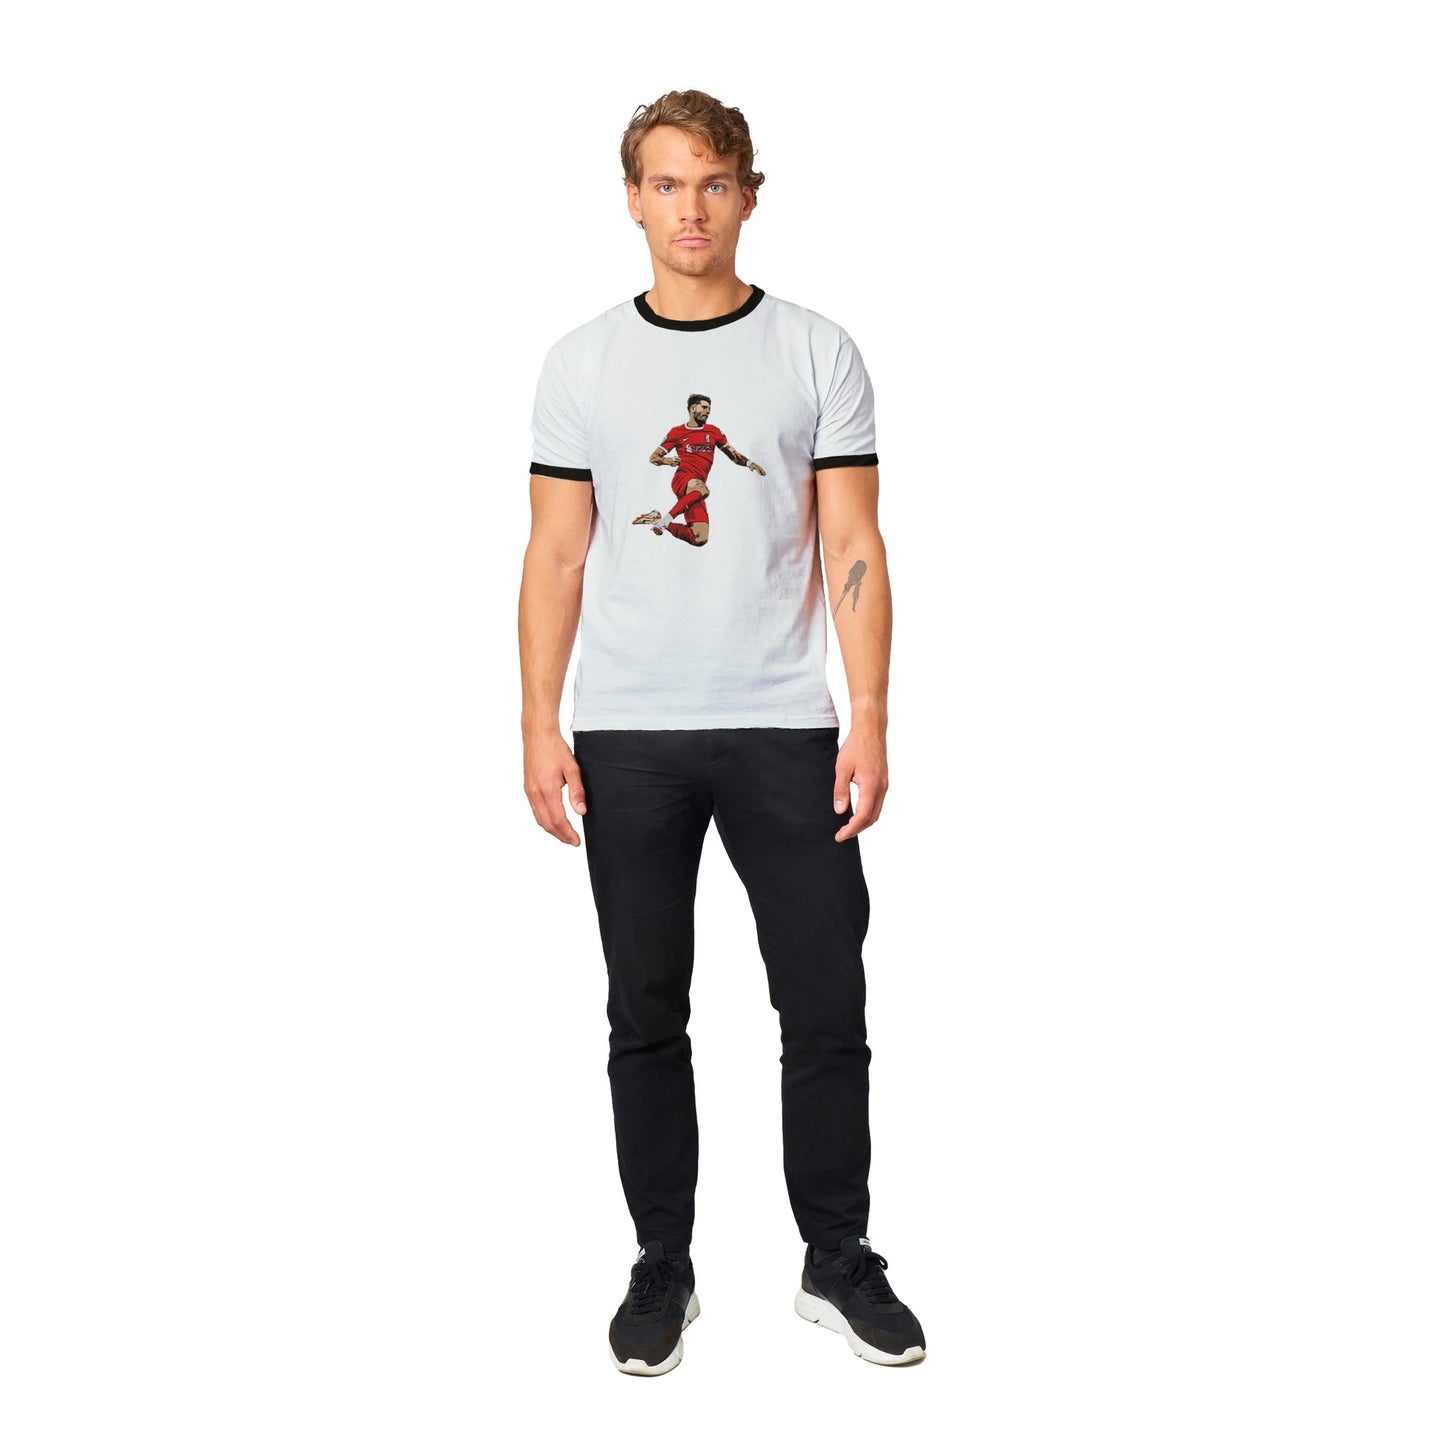 Szobo - LFC - Premium Unisex Crewneck T-shirt - Unisex Ringer T-shirt